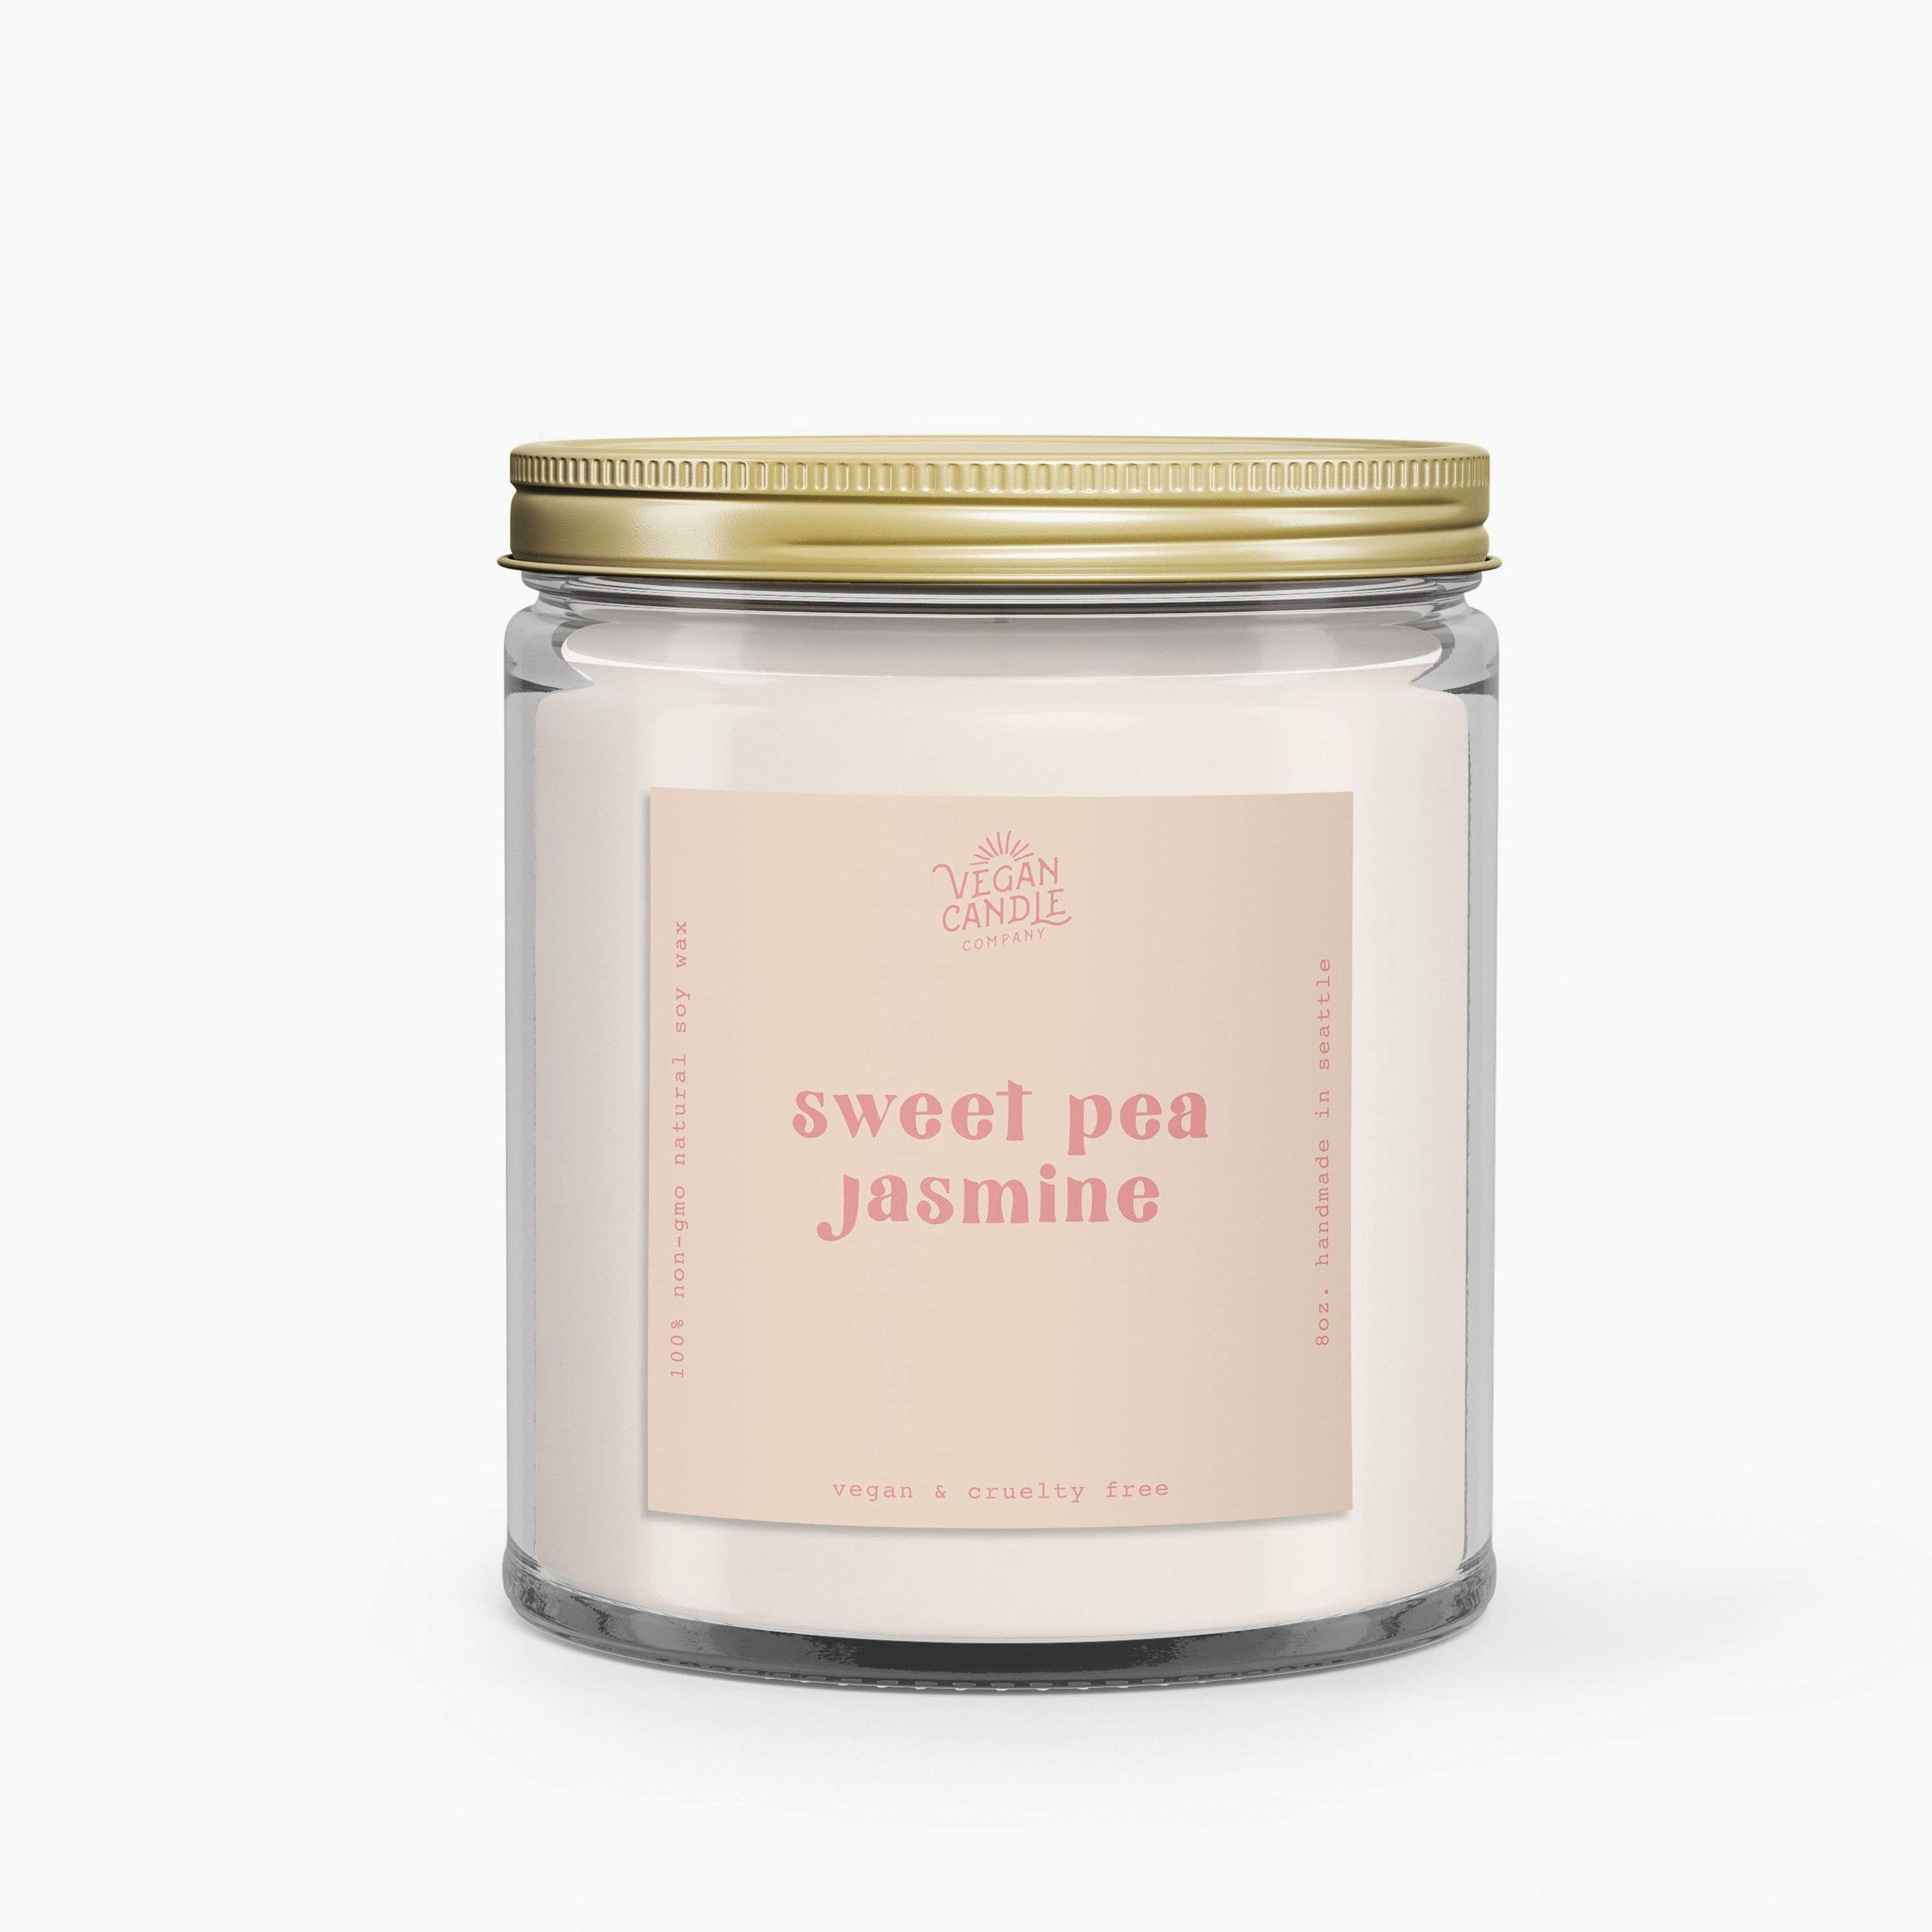 Sweet Pea Jasmine Candle 9oz.